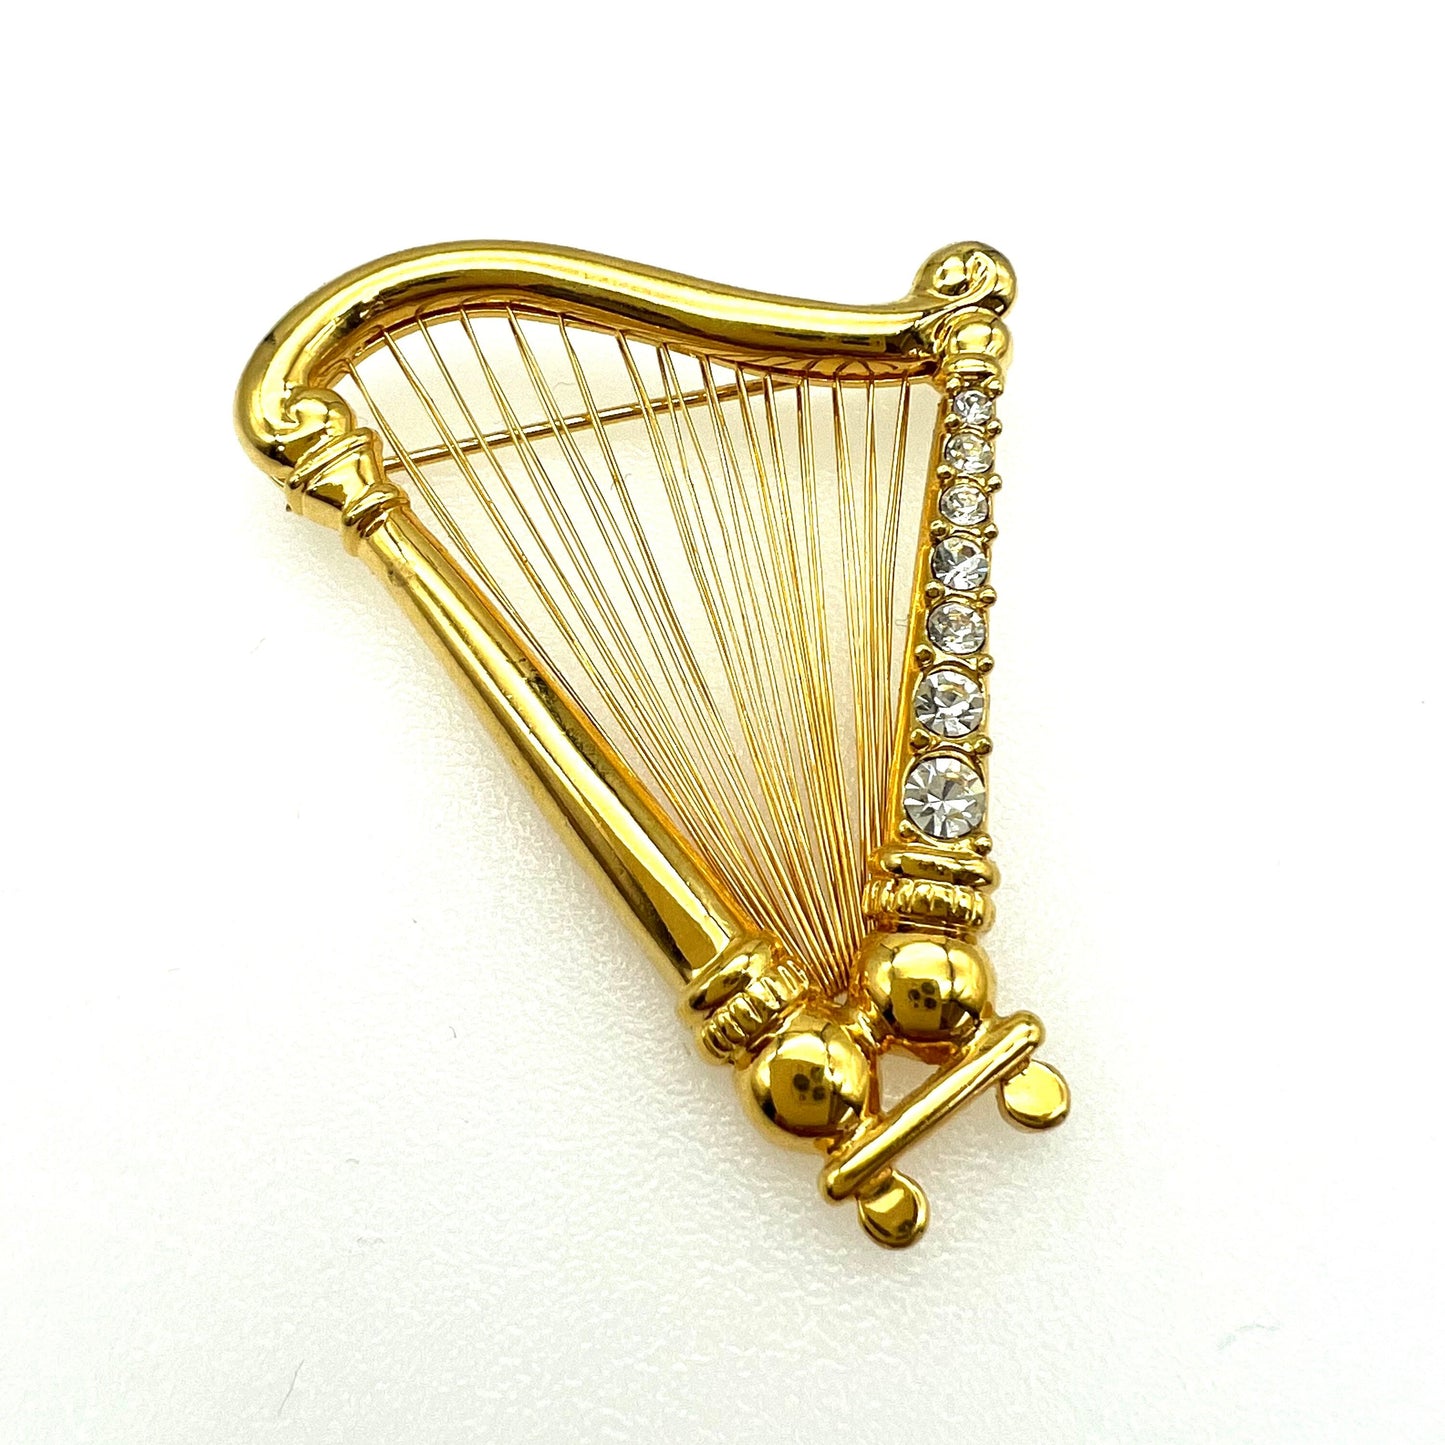 Monet Harp Brooch with Swarovski Crystals